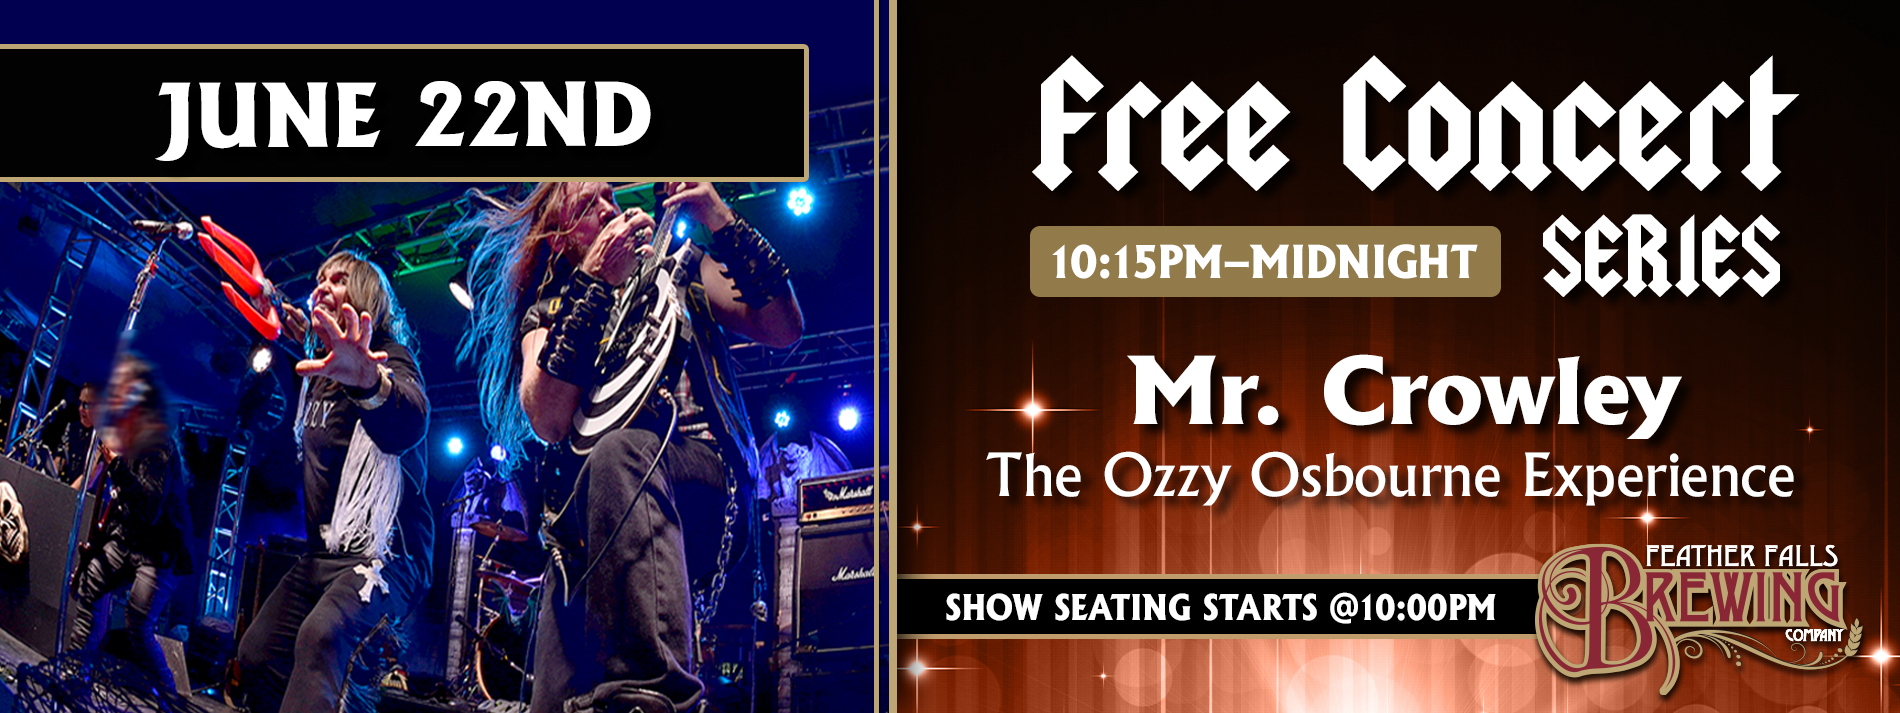 Mr. Crowley - The Ozzy Osbourne Experience